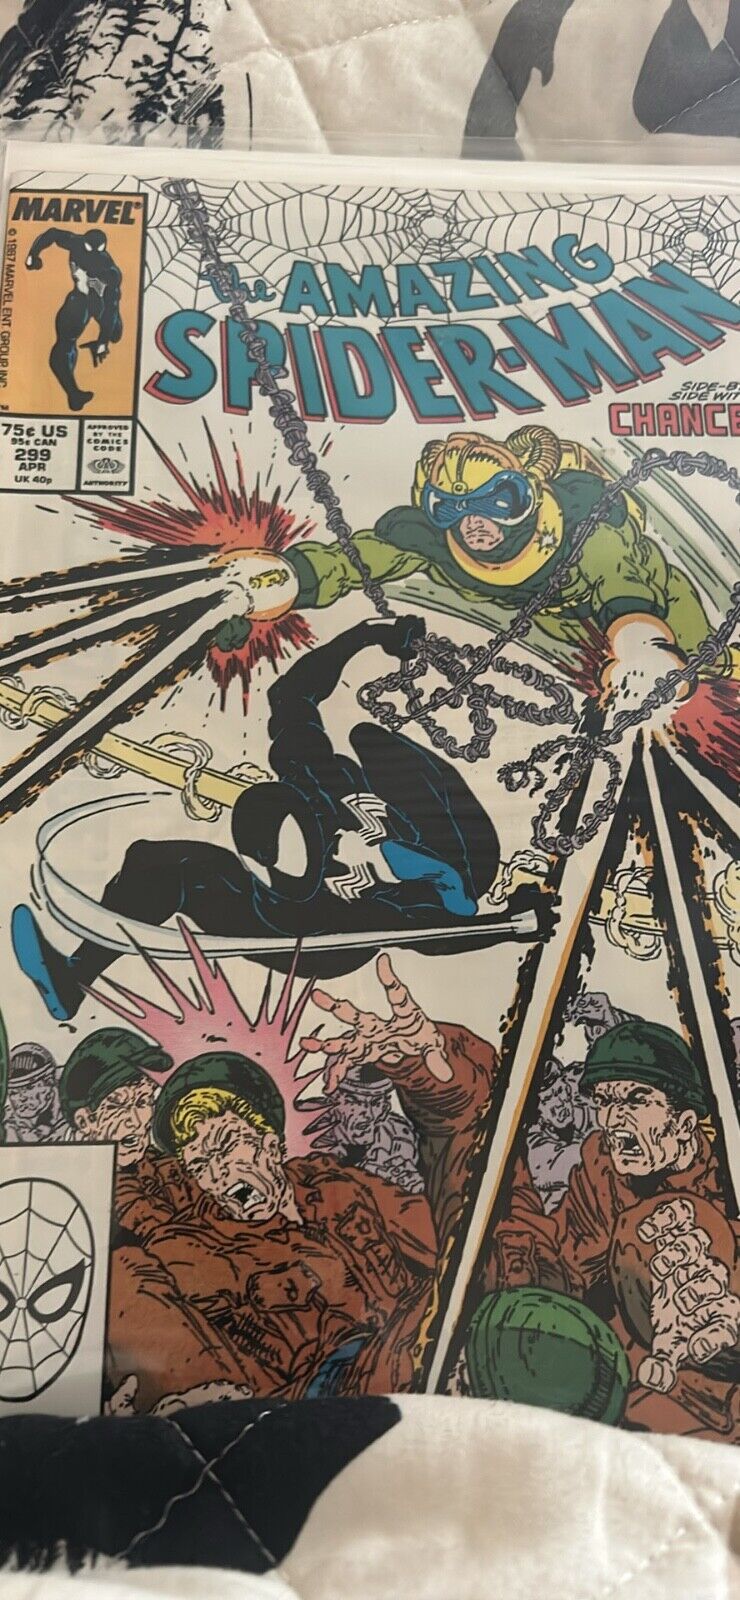 The Amazing Spider-Man #299 (Marvel Comics April 1988)